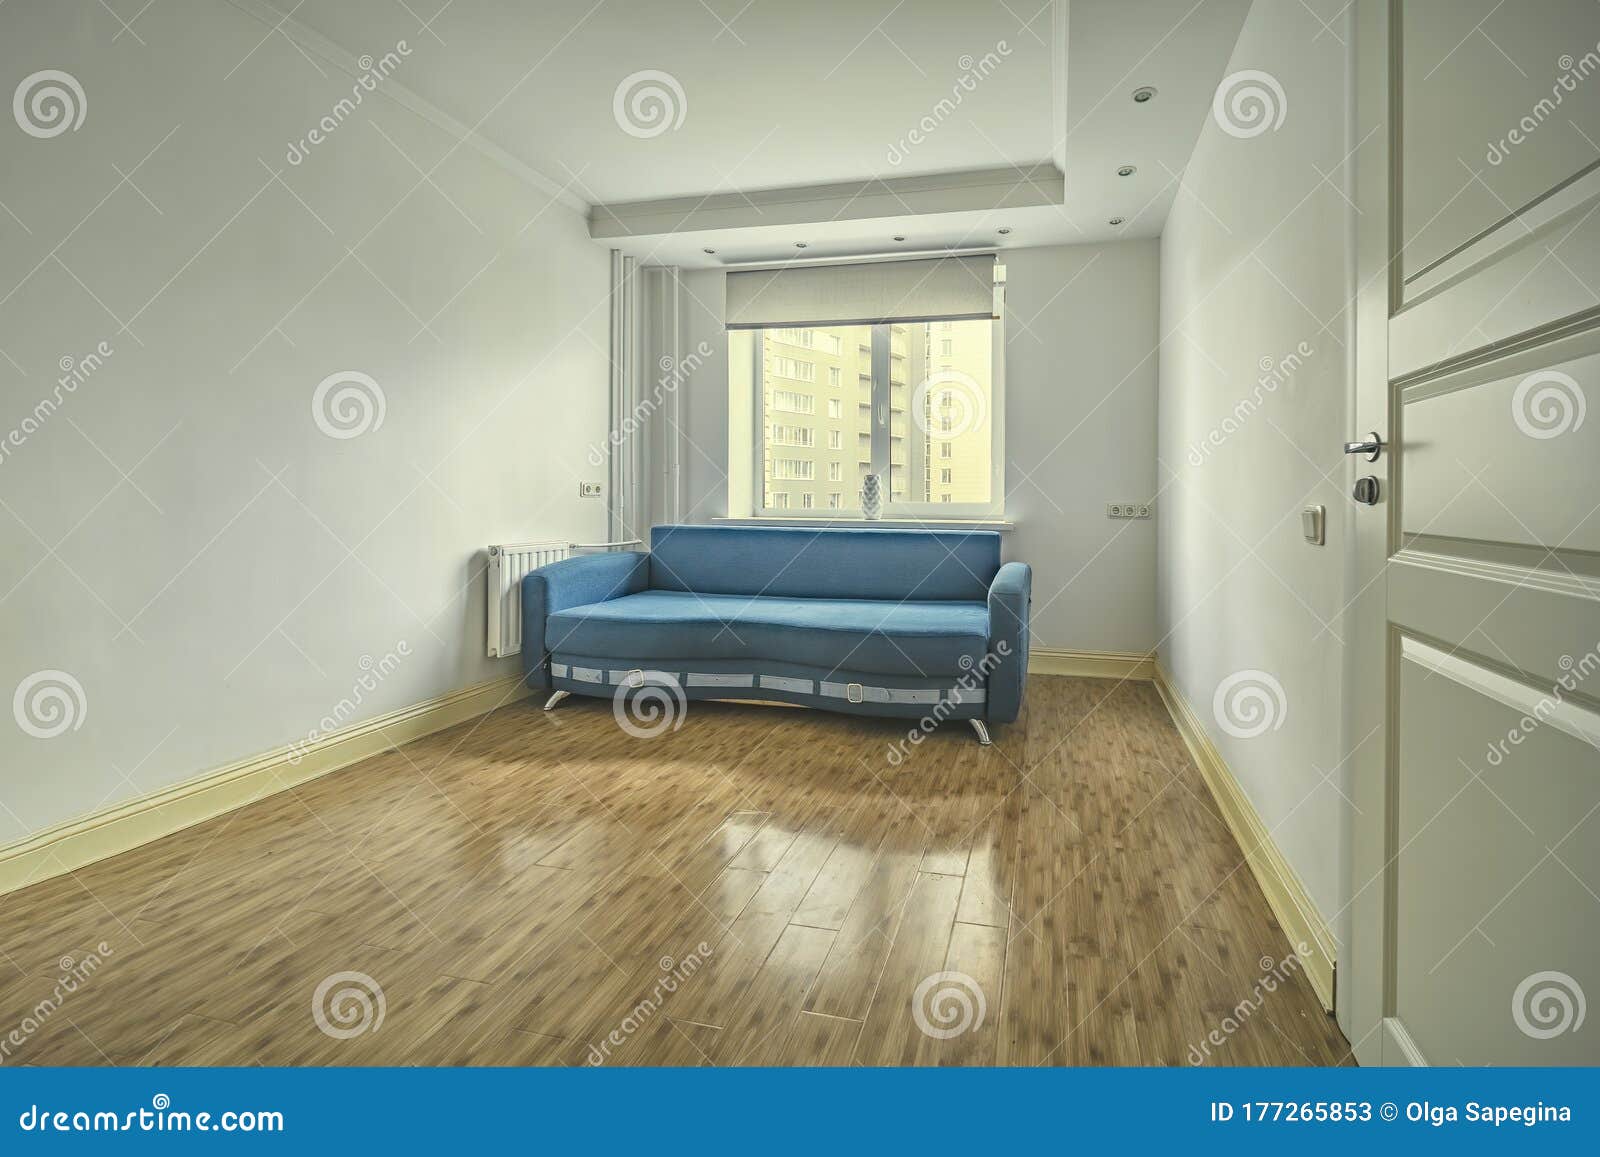 cozy small studio apartment interior in daylight